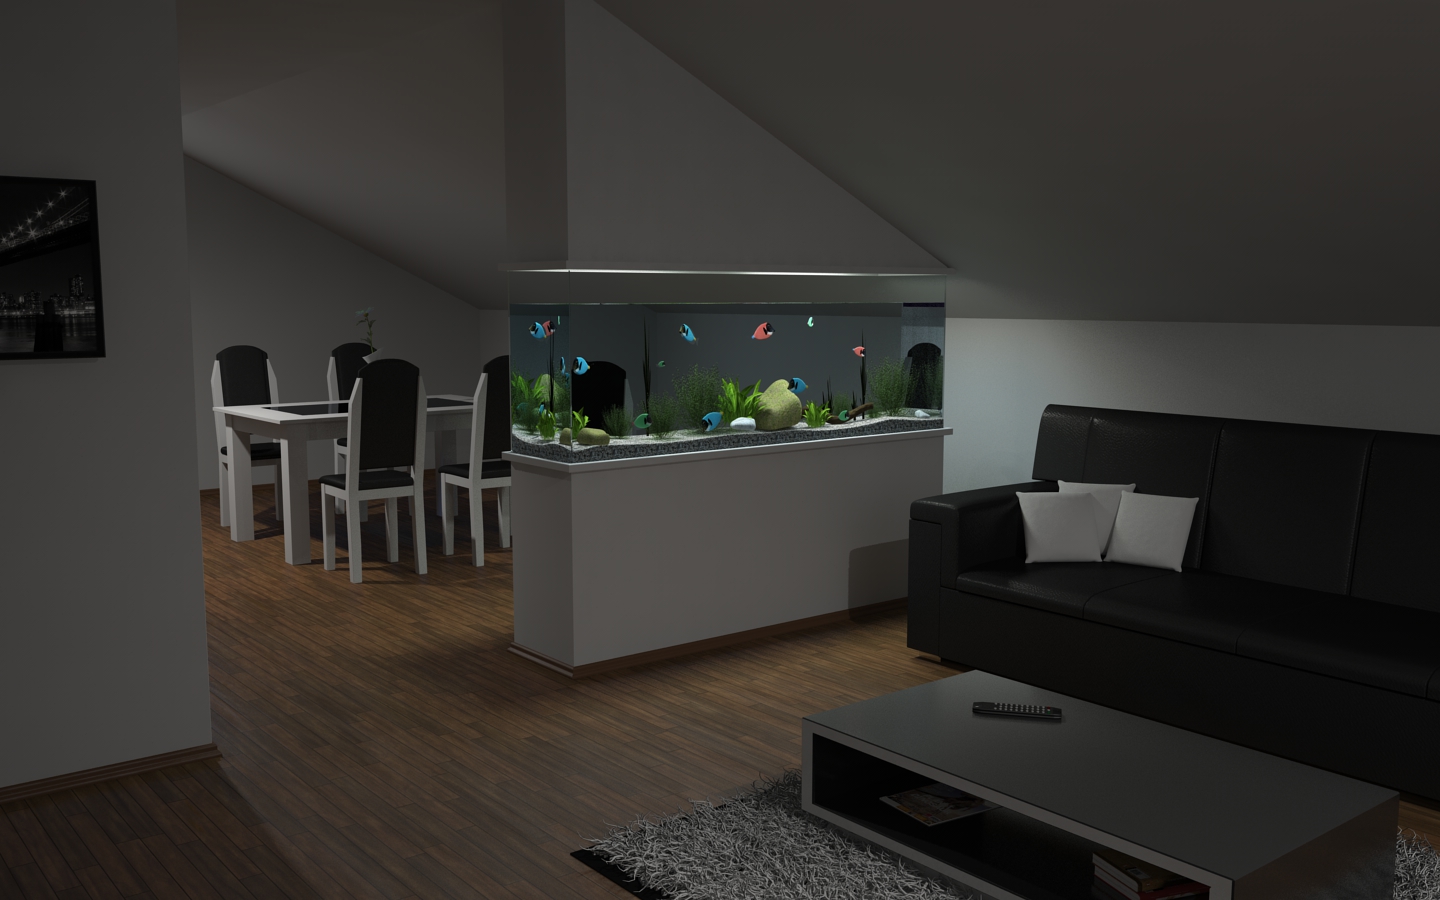 Living room aquarium at evening by slographic on deviantART